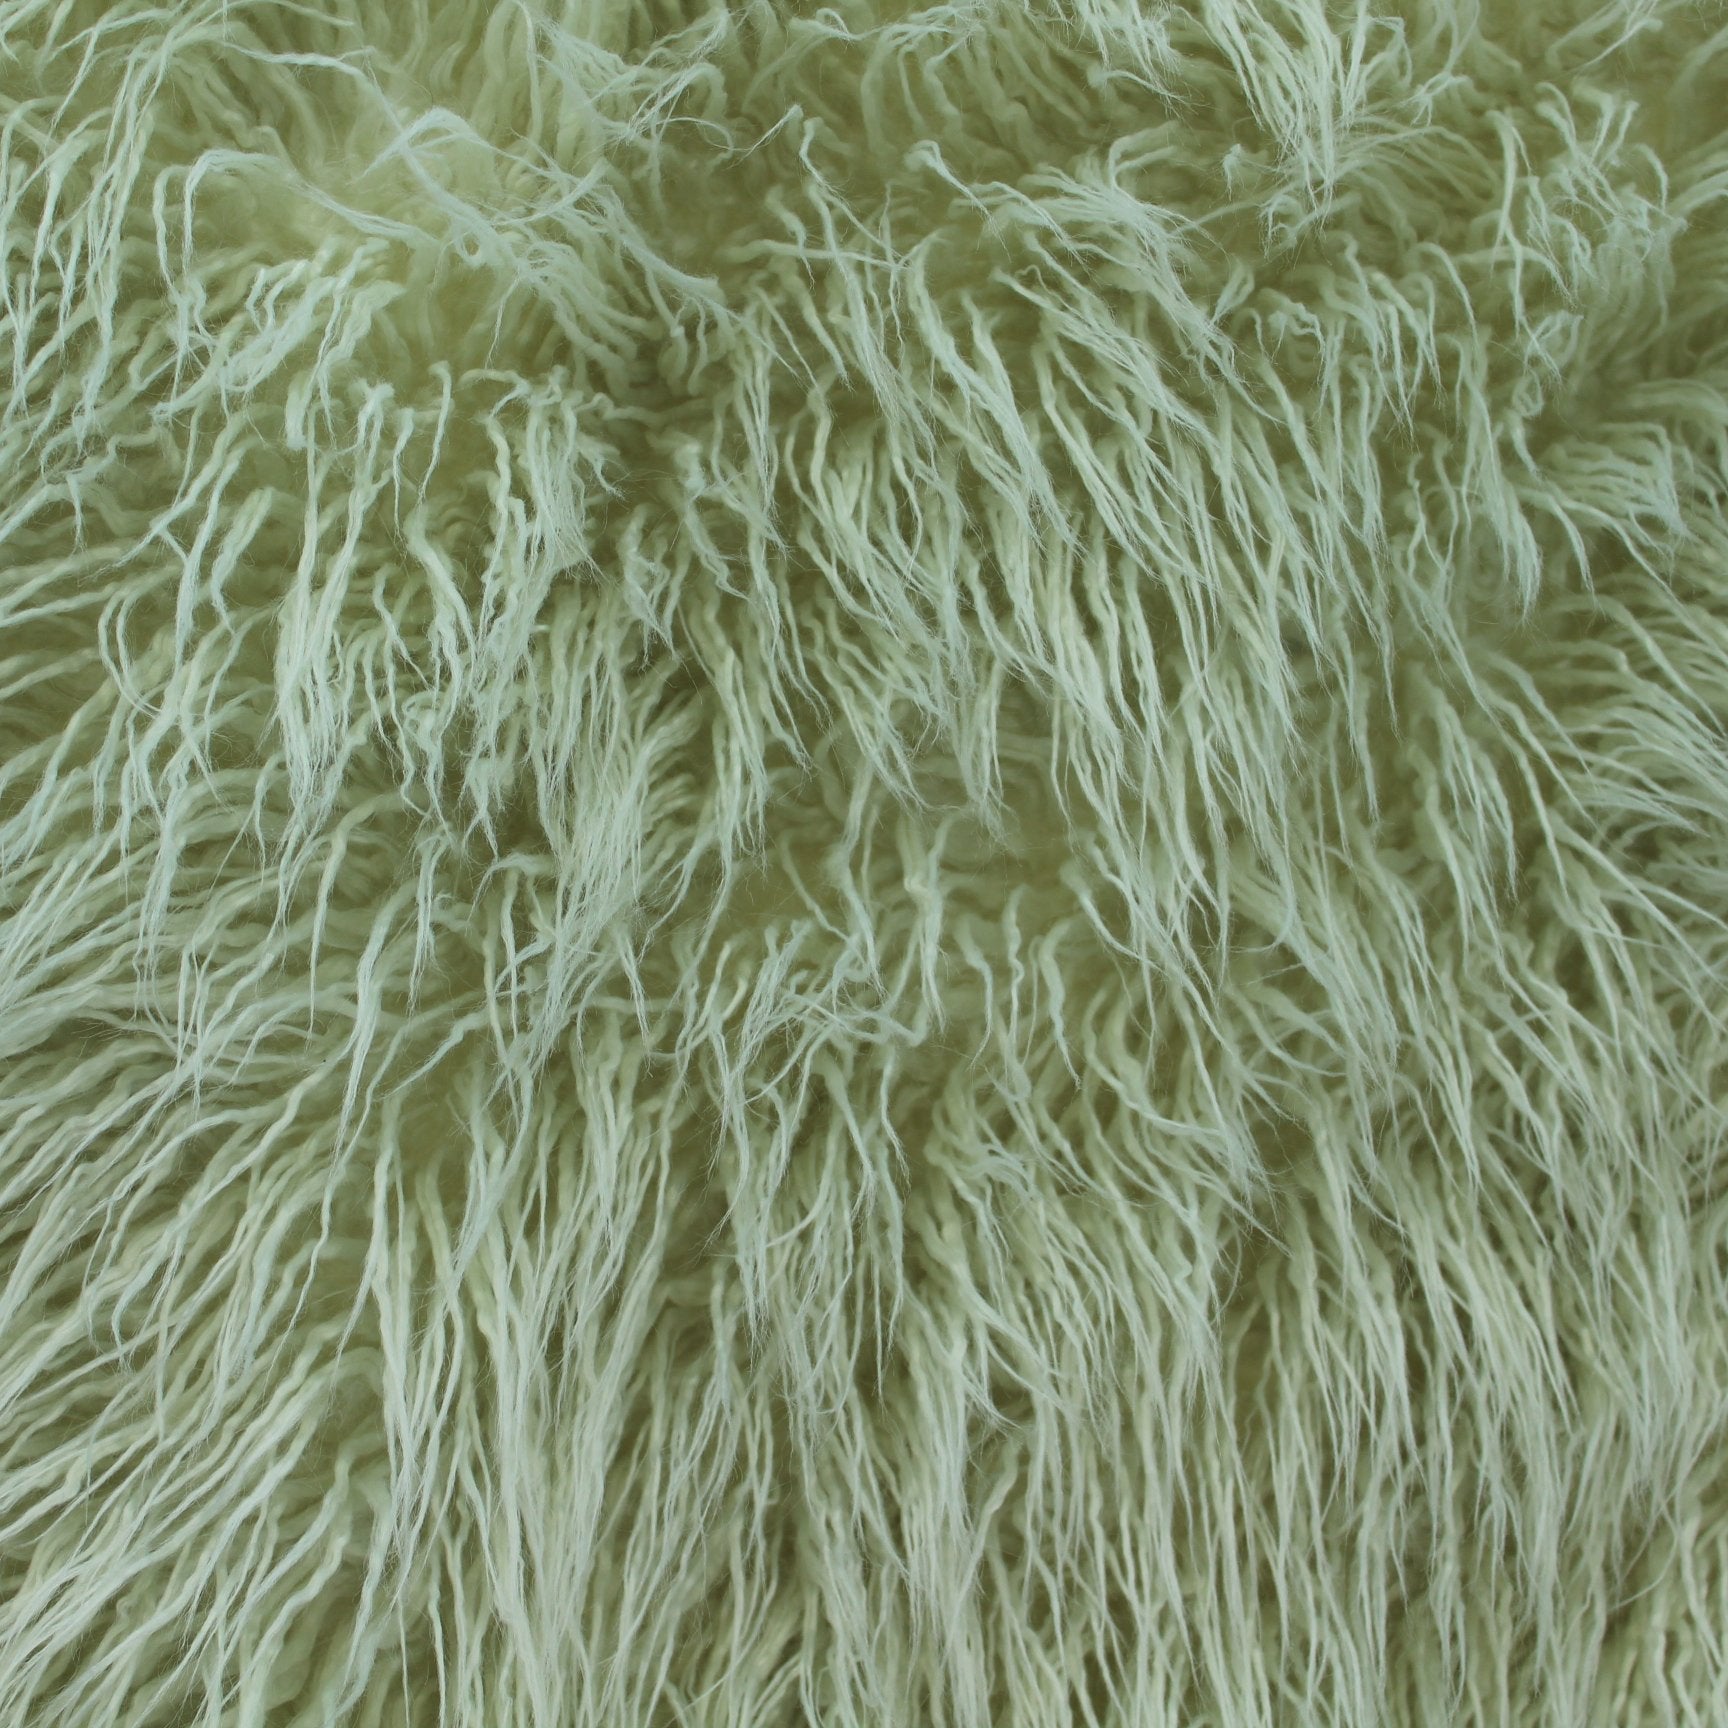 Faux Fur Rug Off White Long Nap Washable Huntington Home 49" X 62" closeup of pile